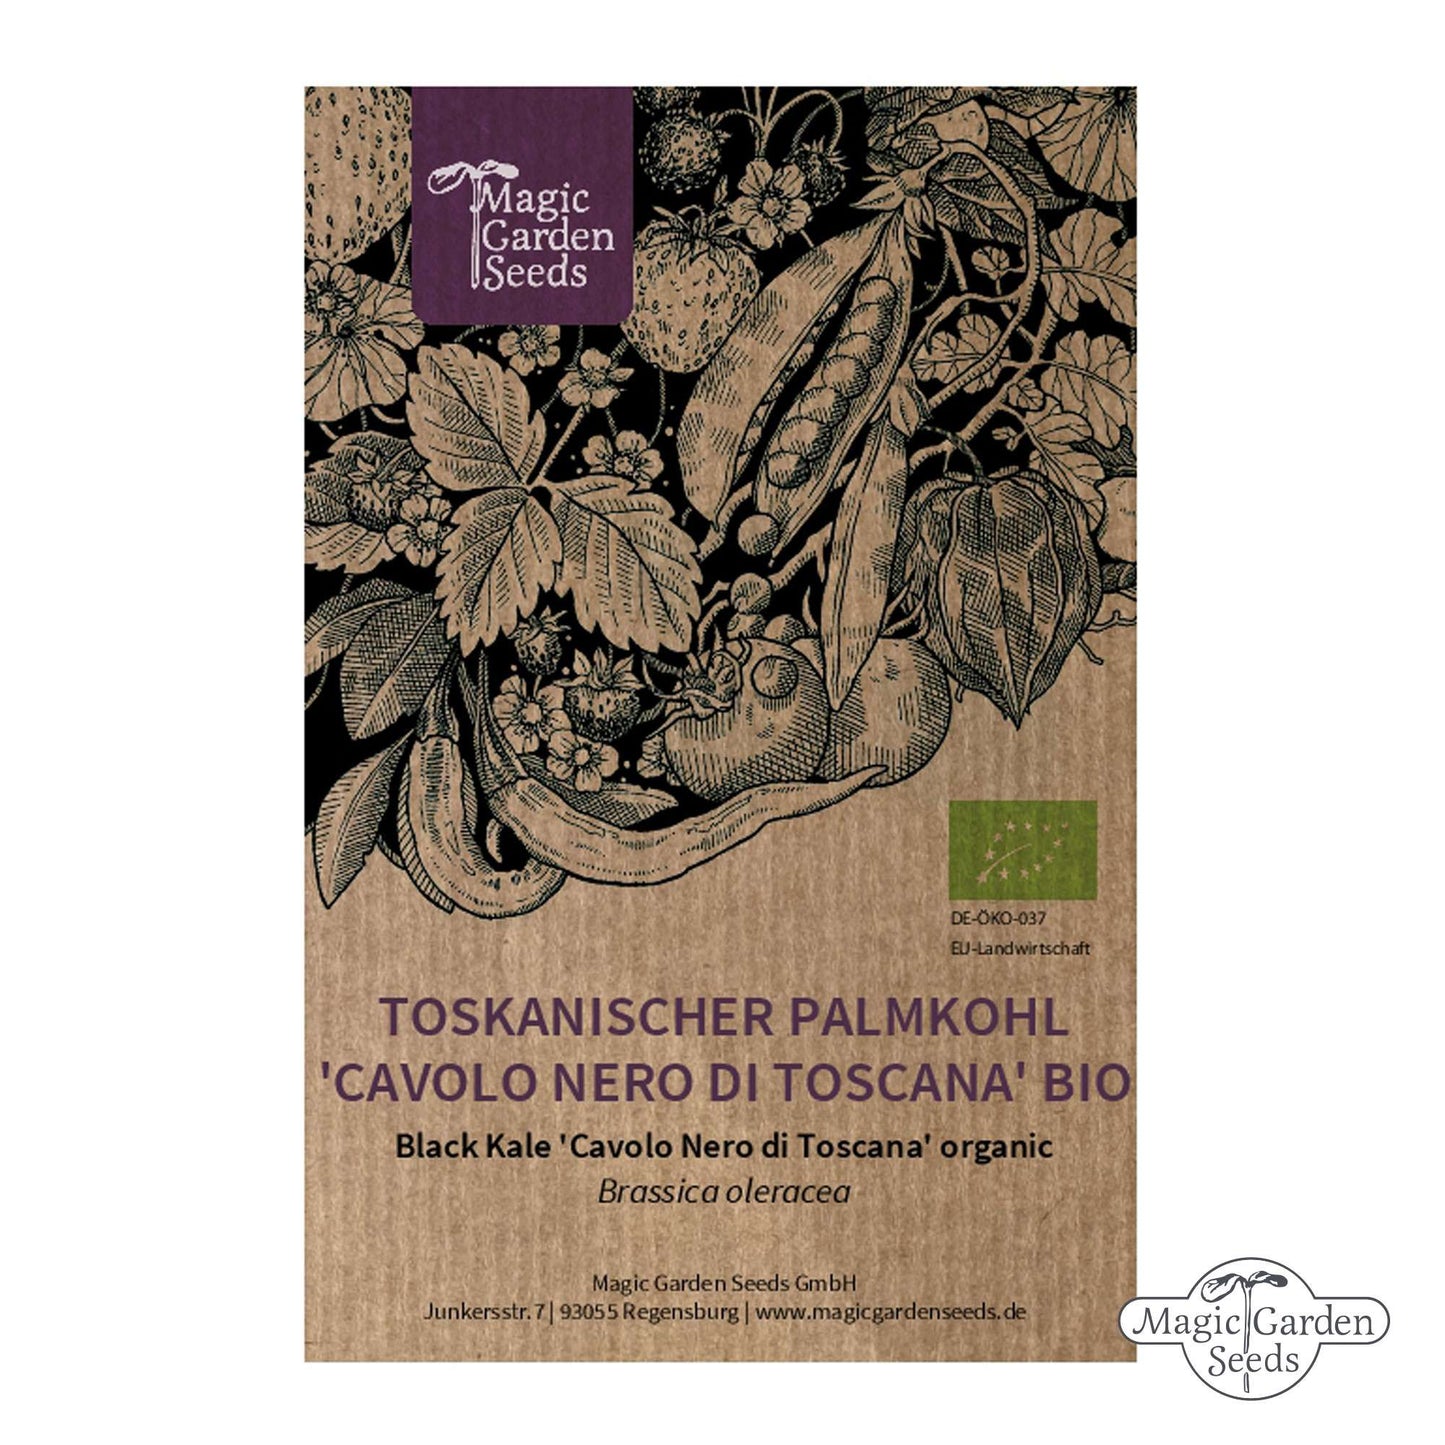 Toskanische Palmkohlsamen 'Cavolo Nero di Toscana' aus biologischem Anbau